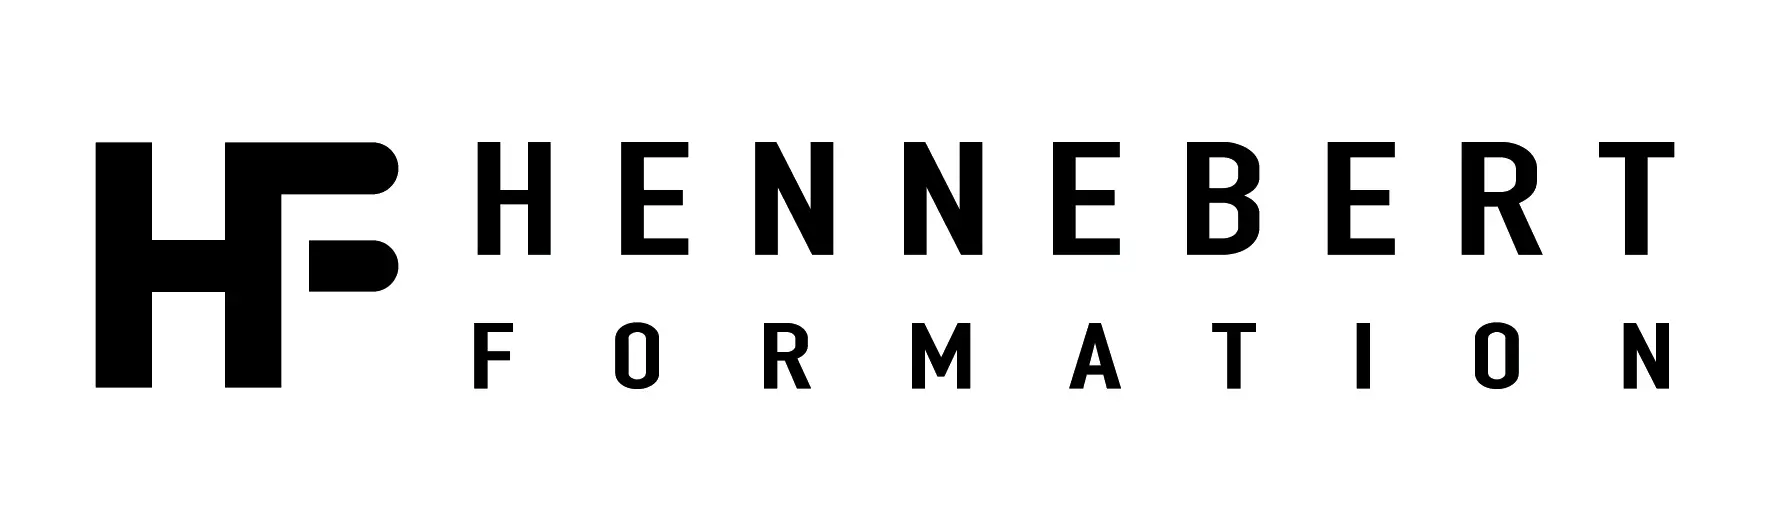 logo HENNEBERT FORMATION